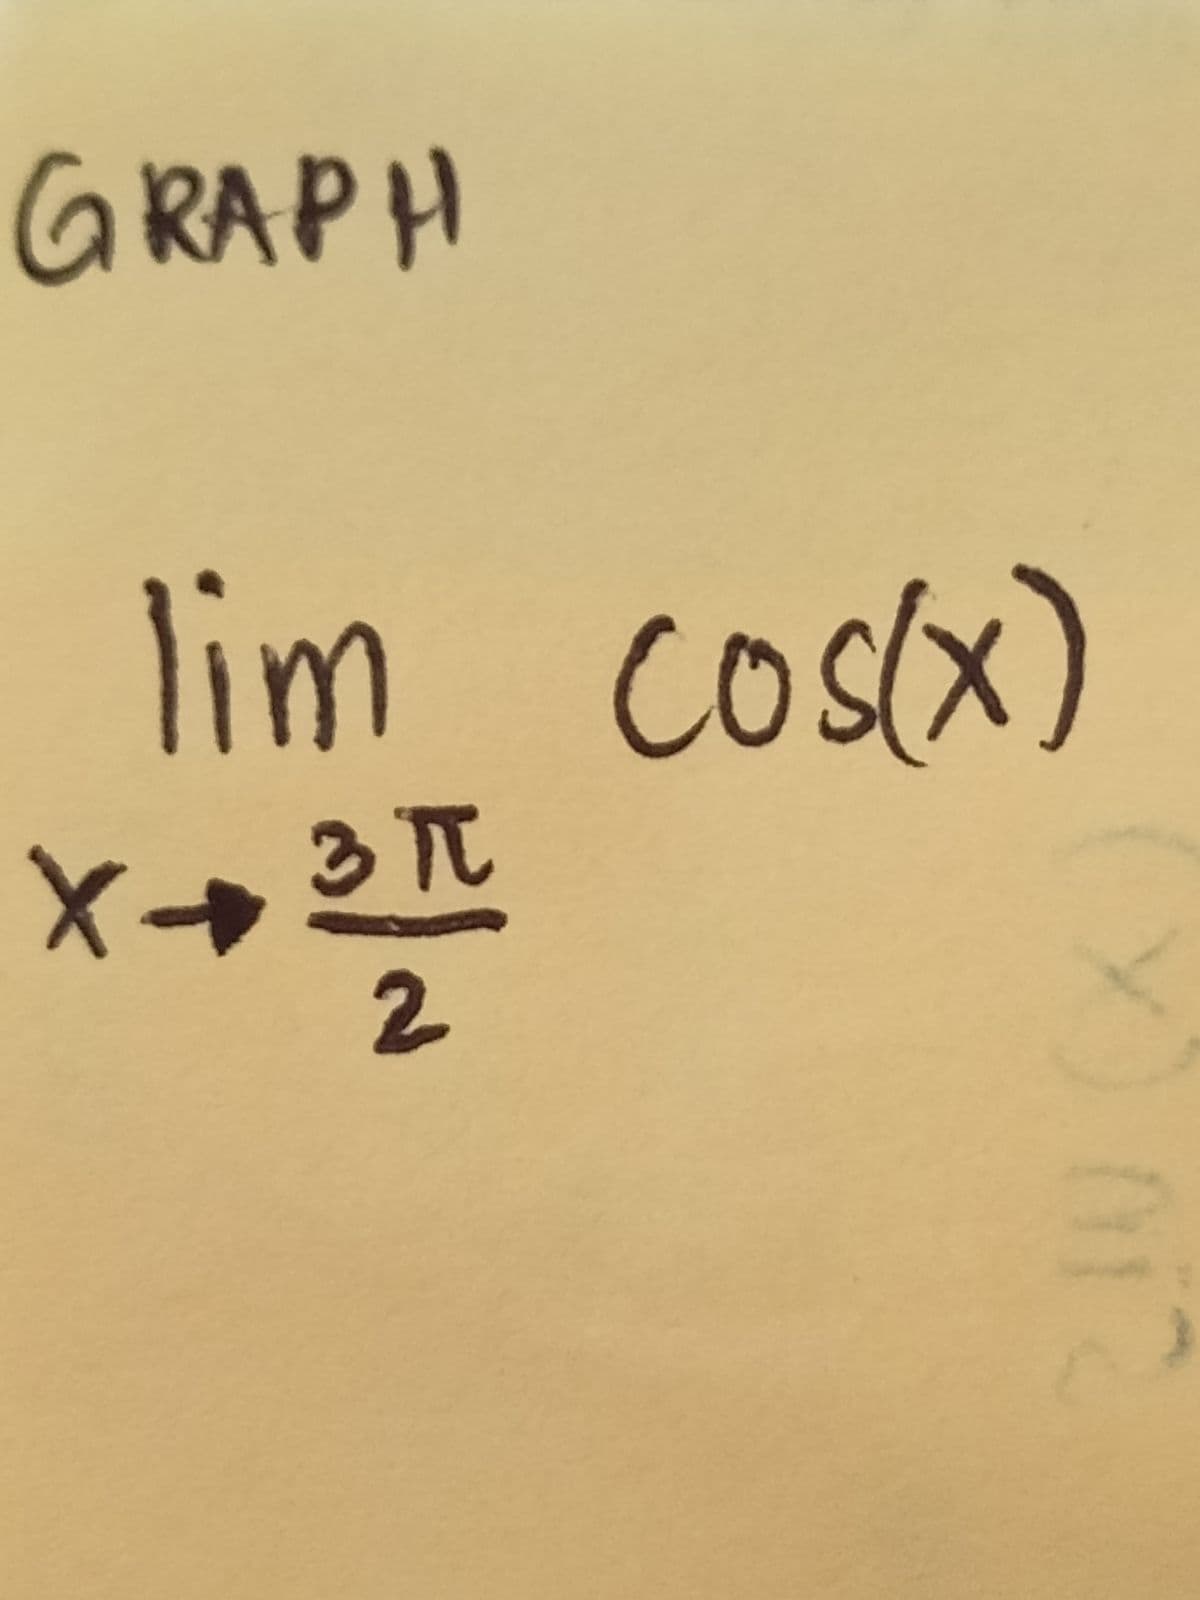 GRAPH
lim
cos(x)
X-
3.
3 TC
